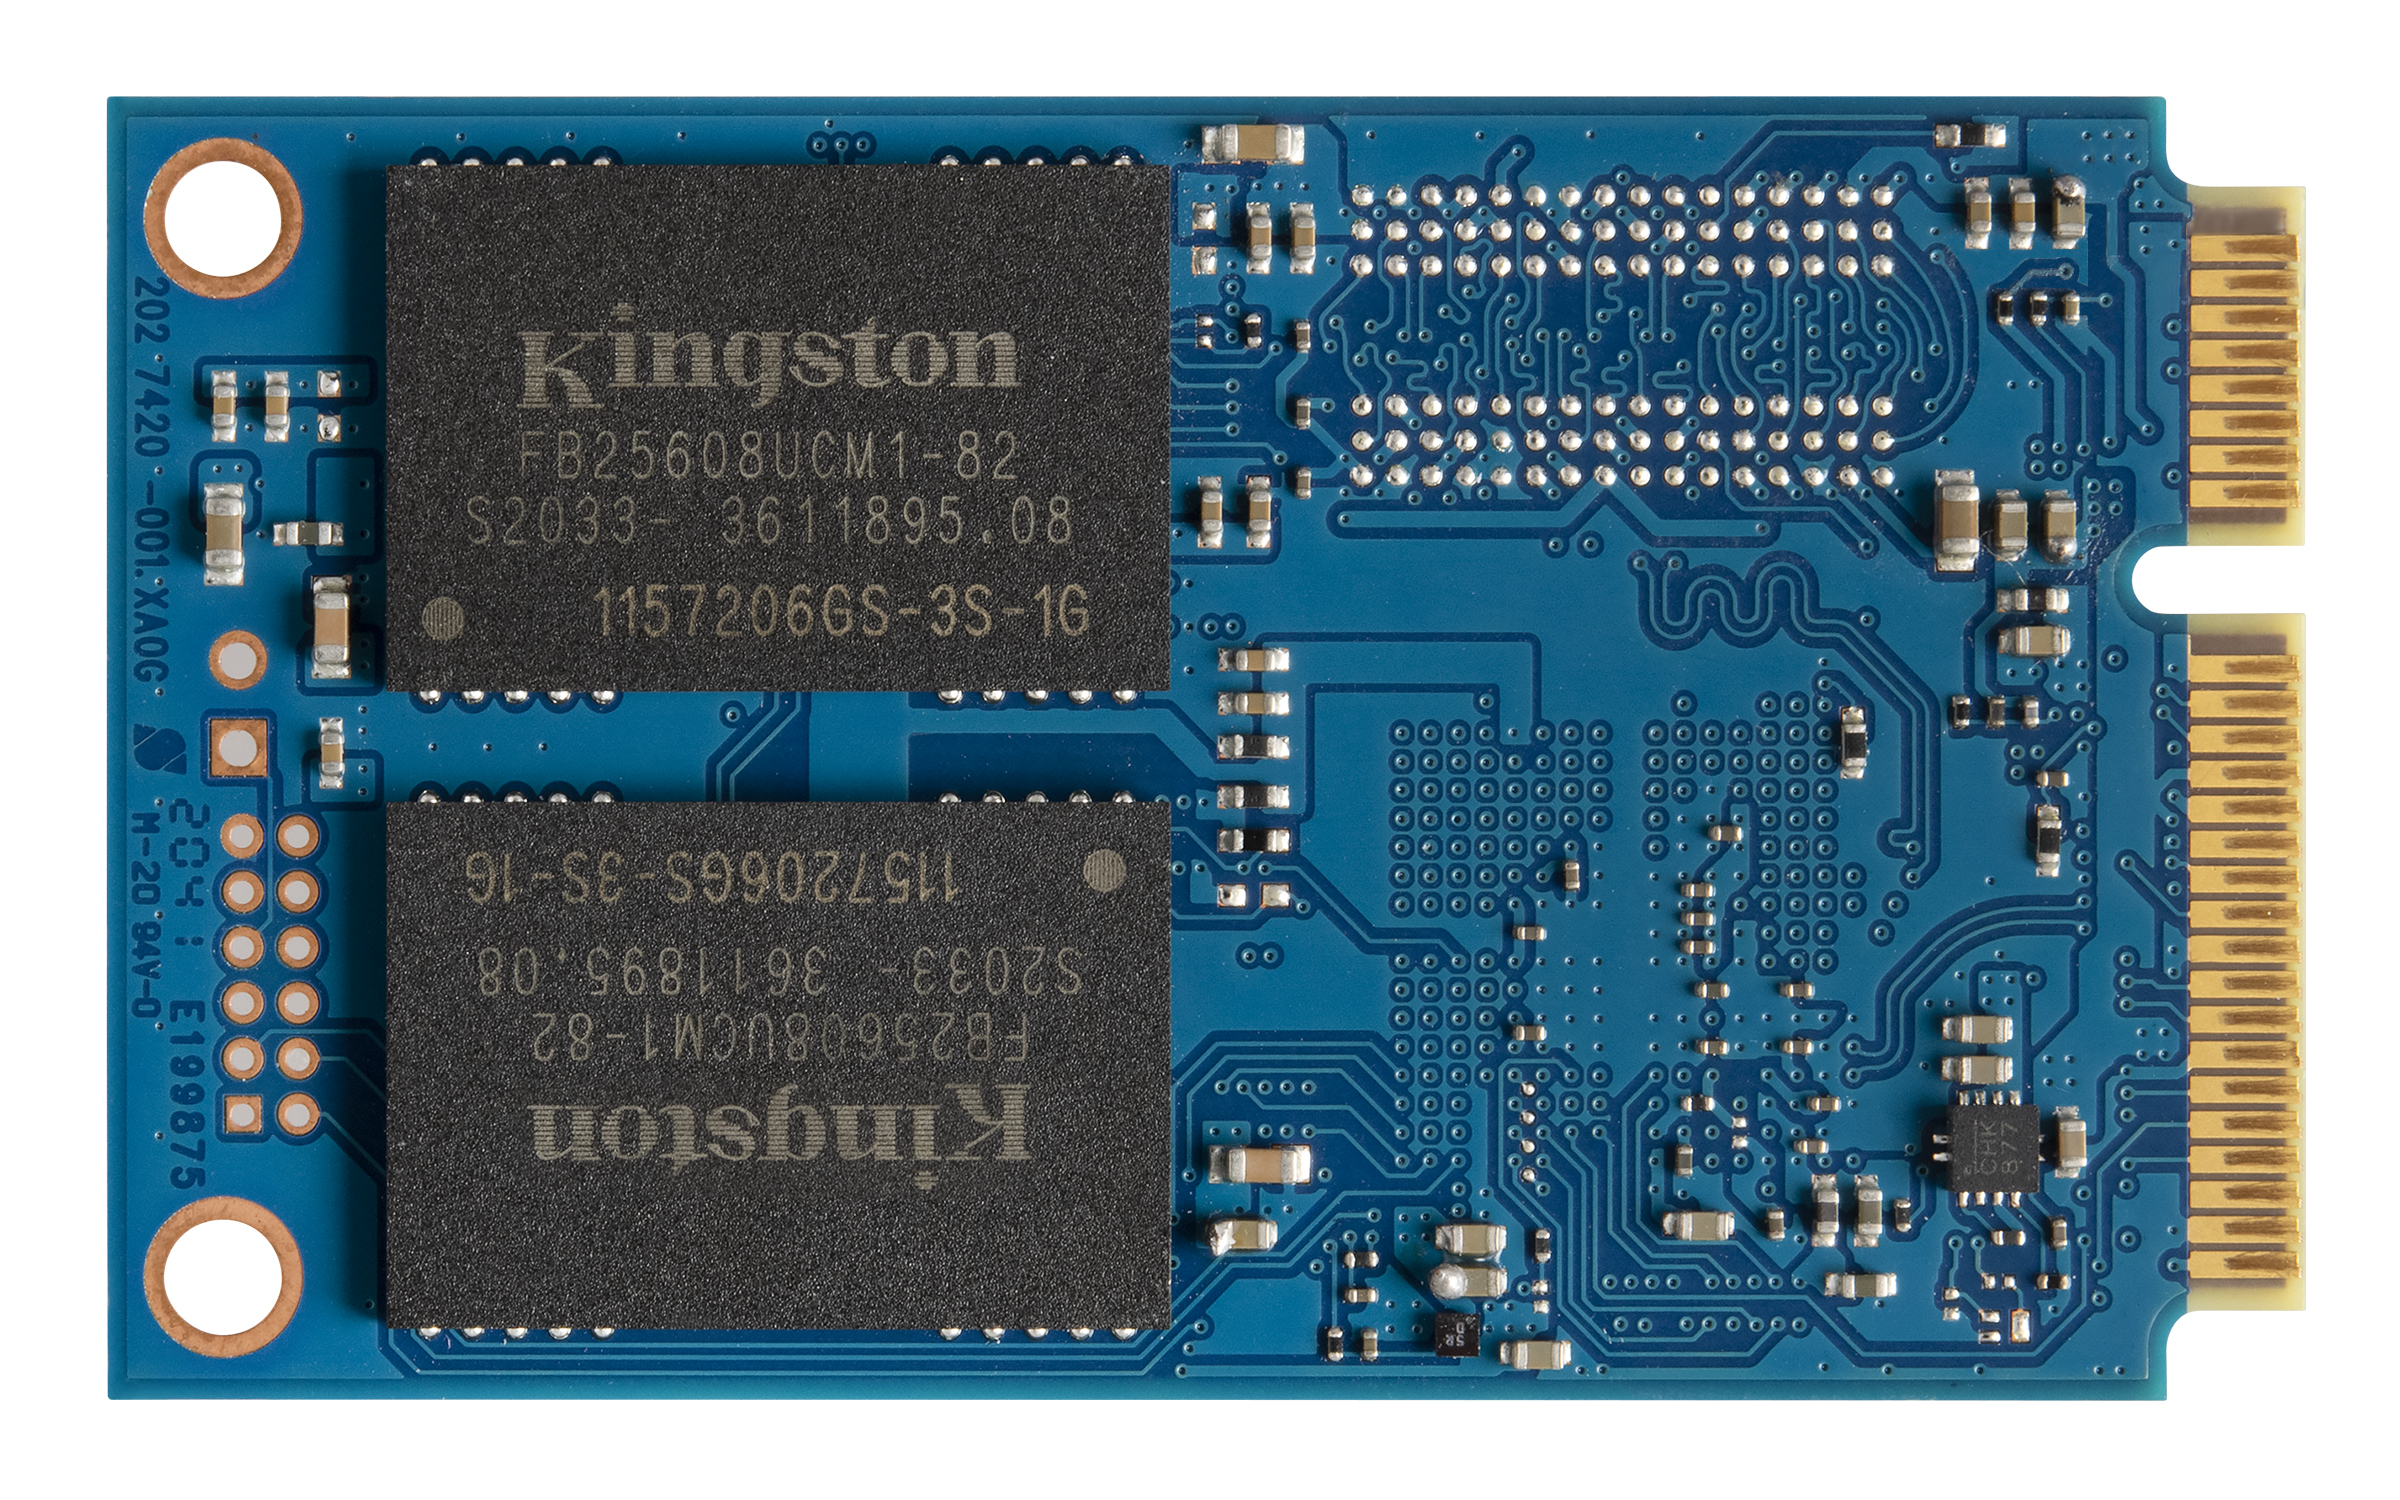 Kingston KC600 - 256 GB - mSATA - 550 MB/s - 6 Gbit/s